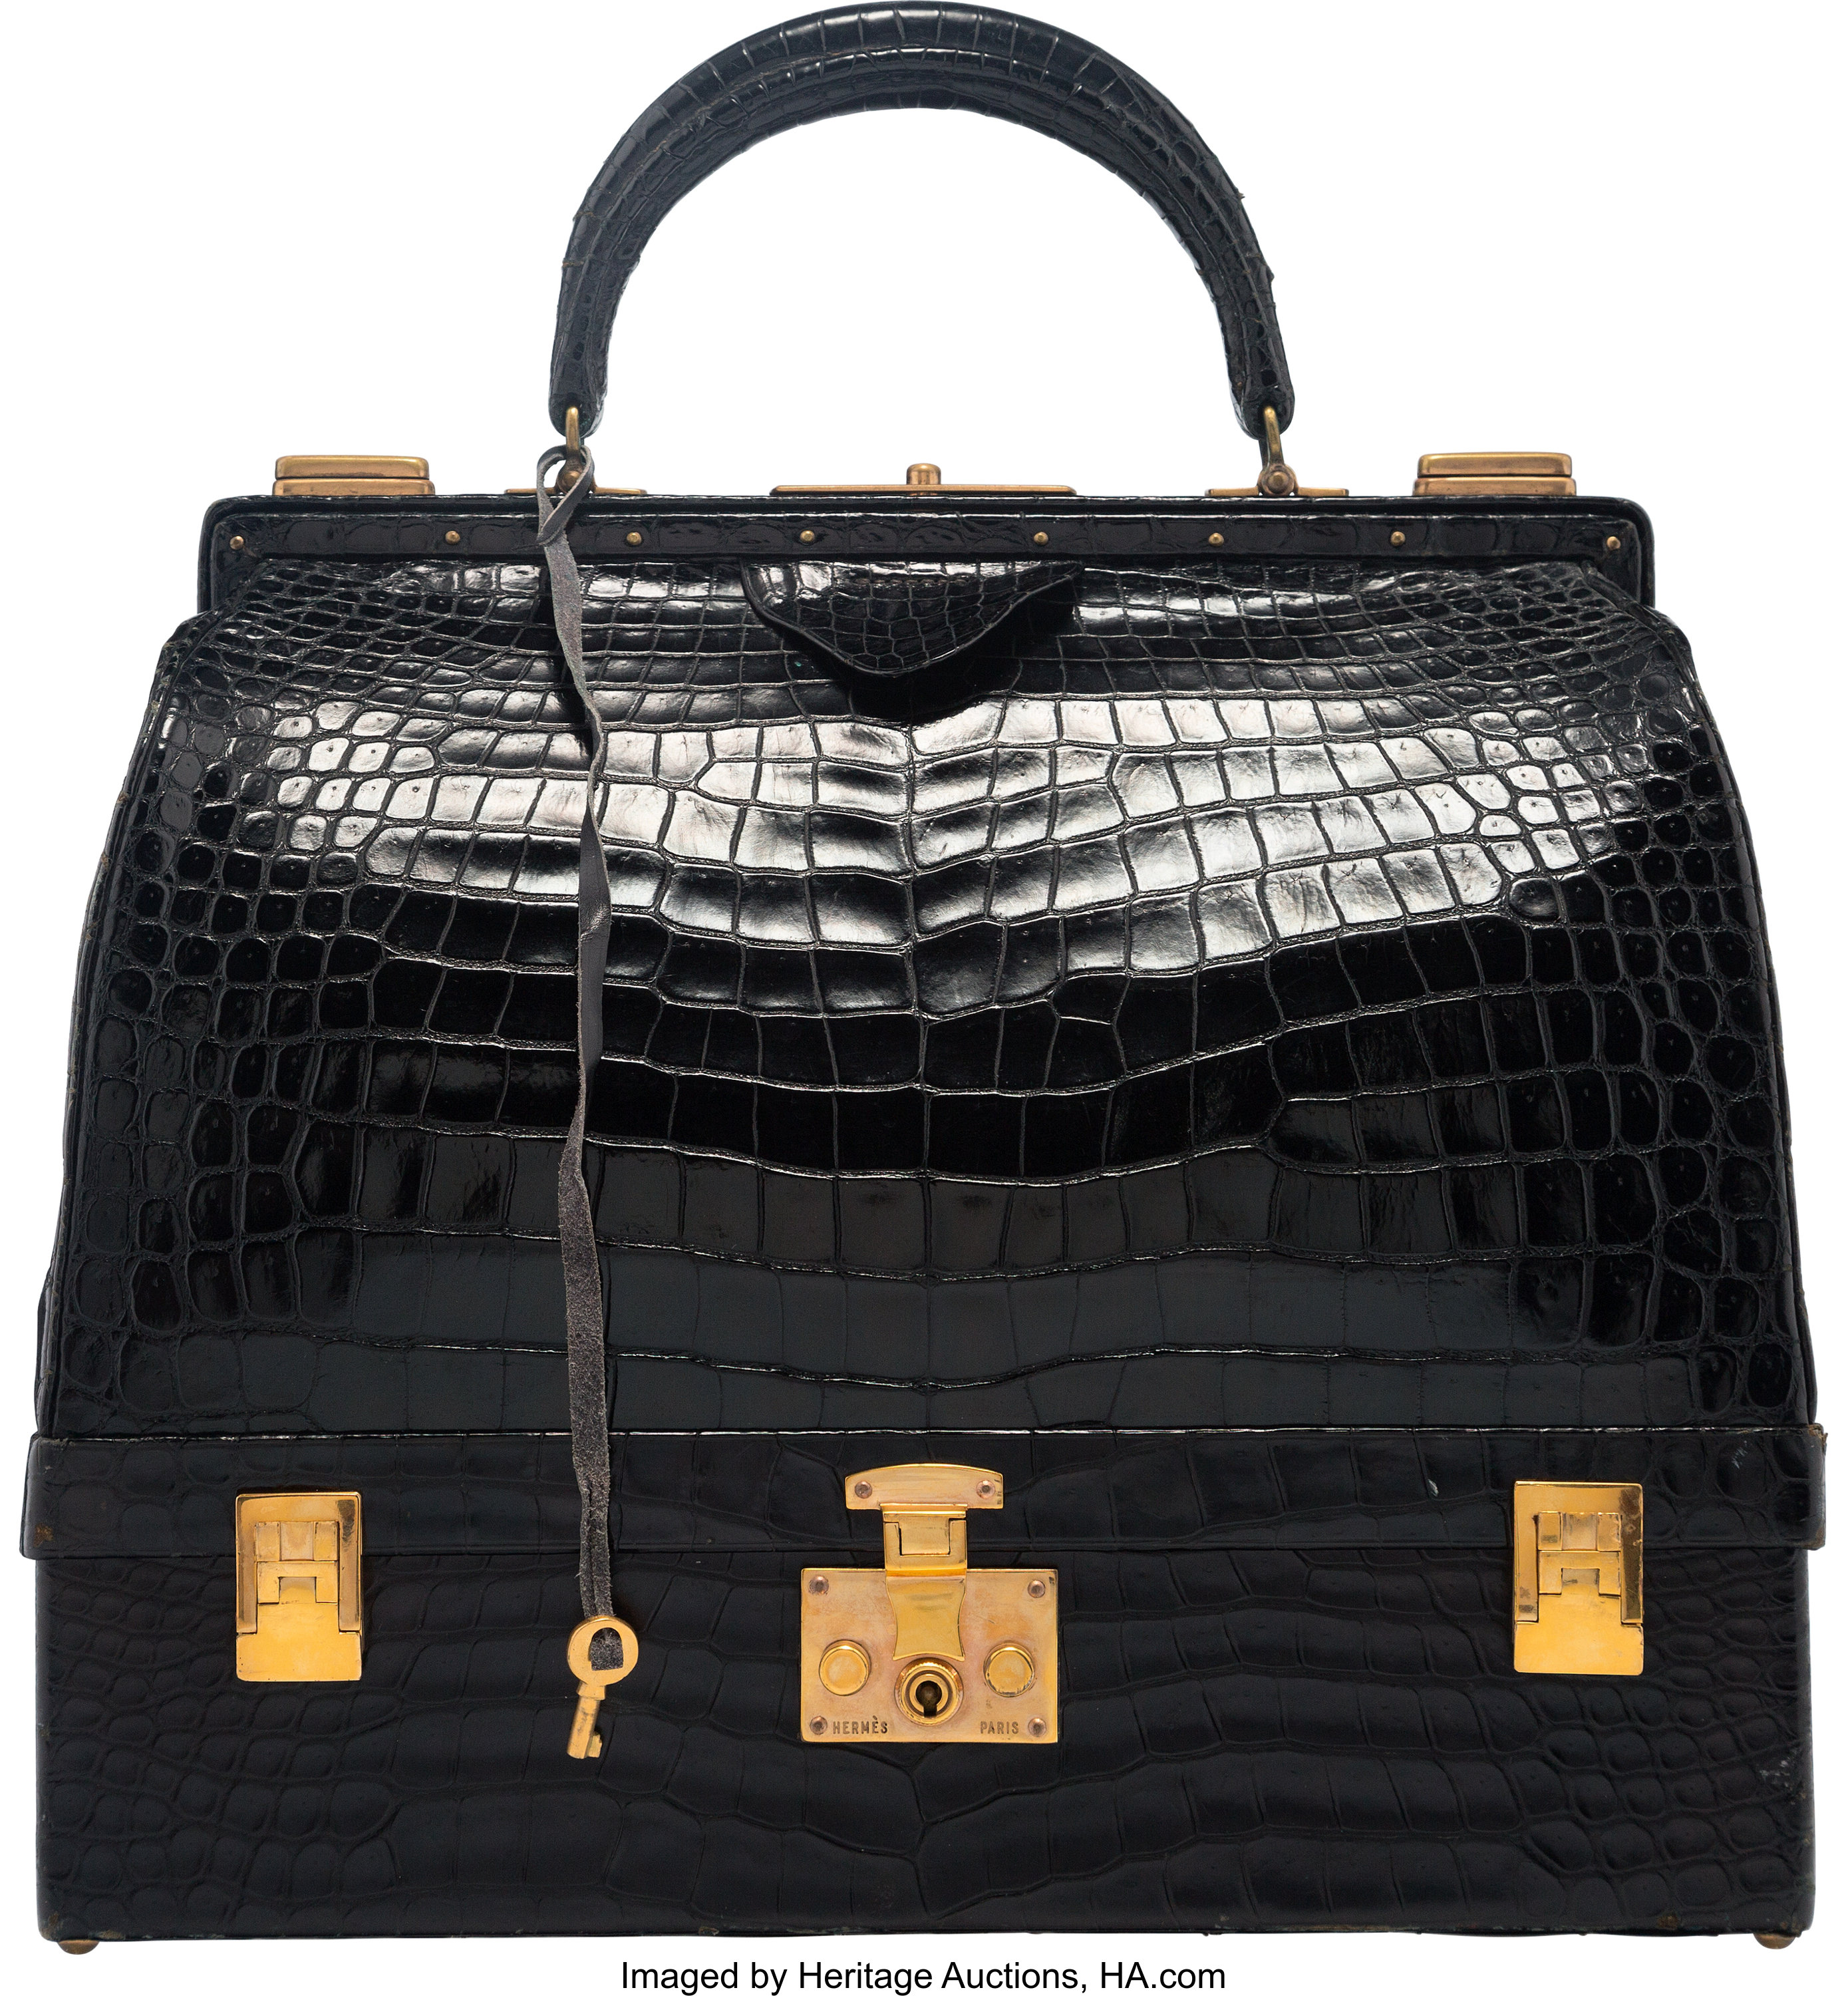 Hermes Black Crocodile Vintage Kelly Bag Auction